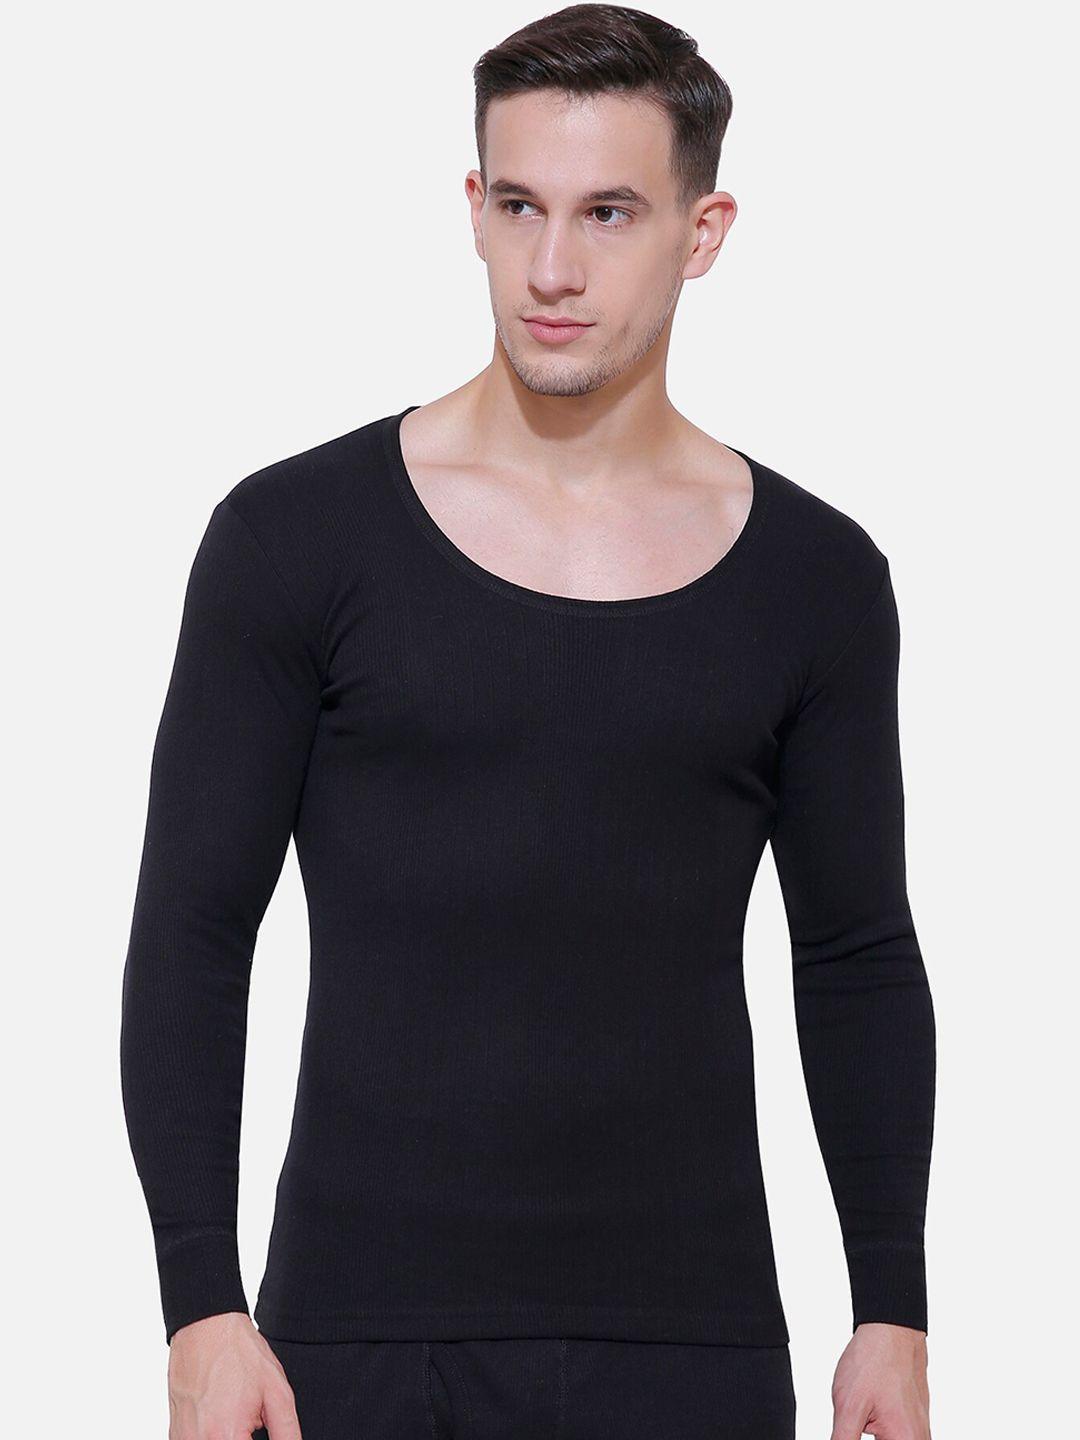 bodycare insider men black striped slim-fit thermal t-shirt